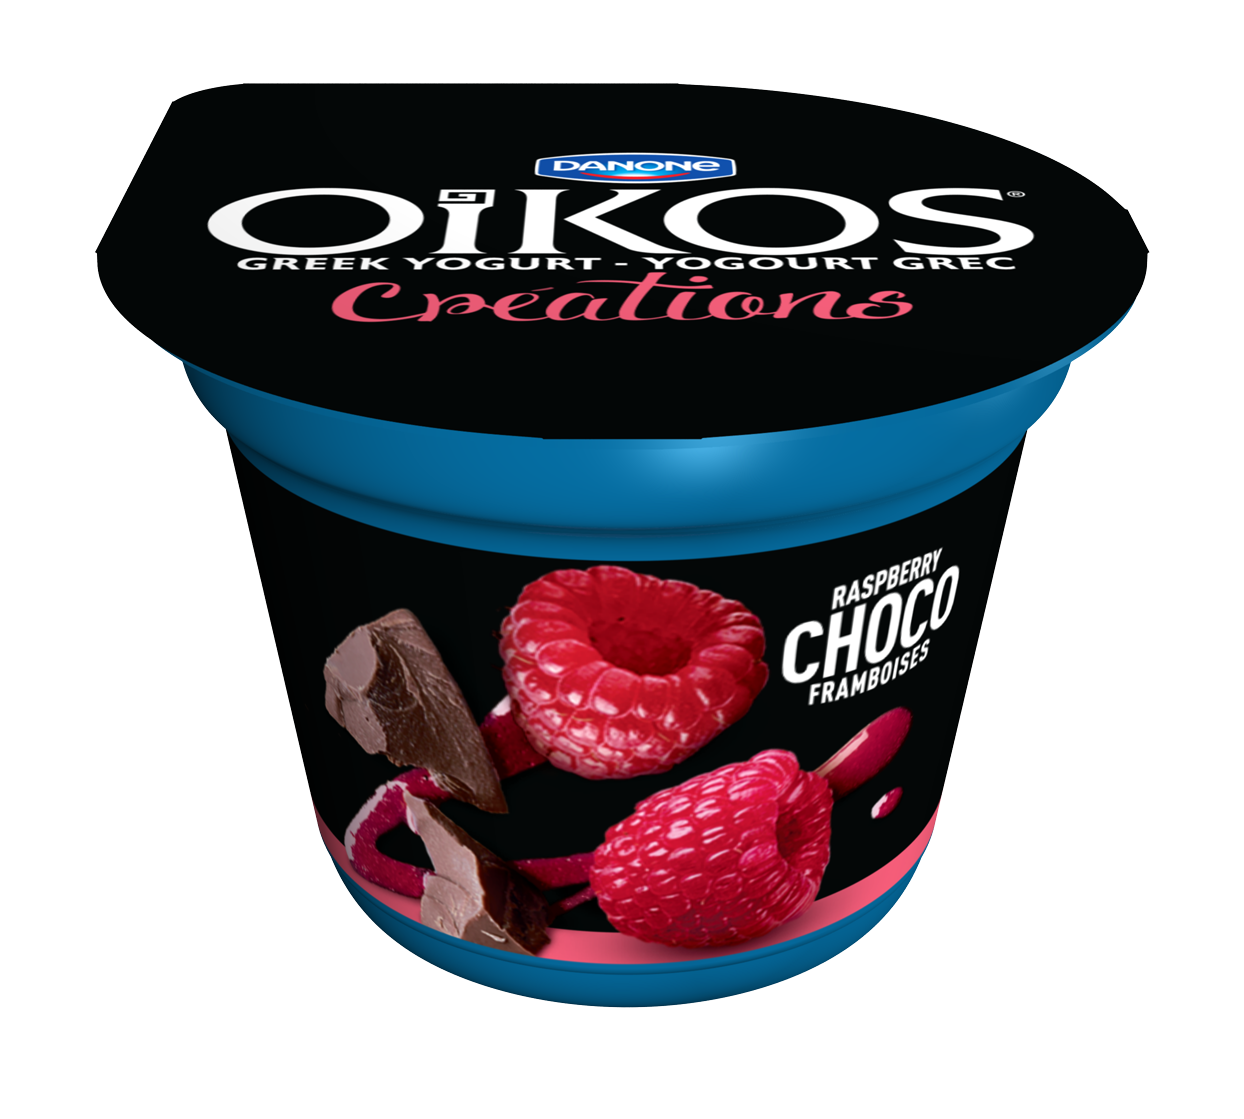 Oikos-creations-choco-framboises_0